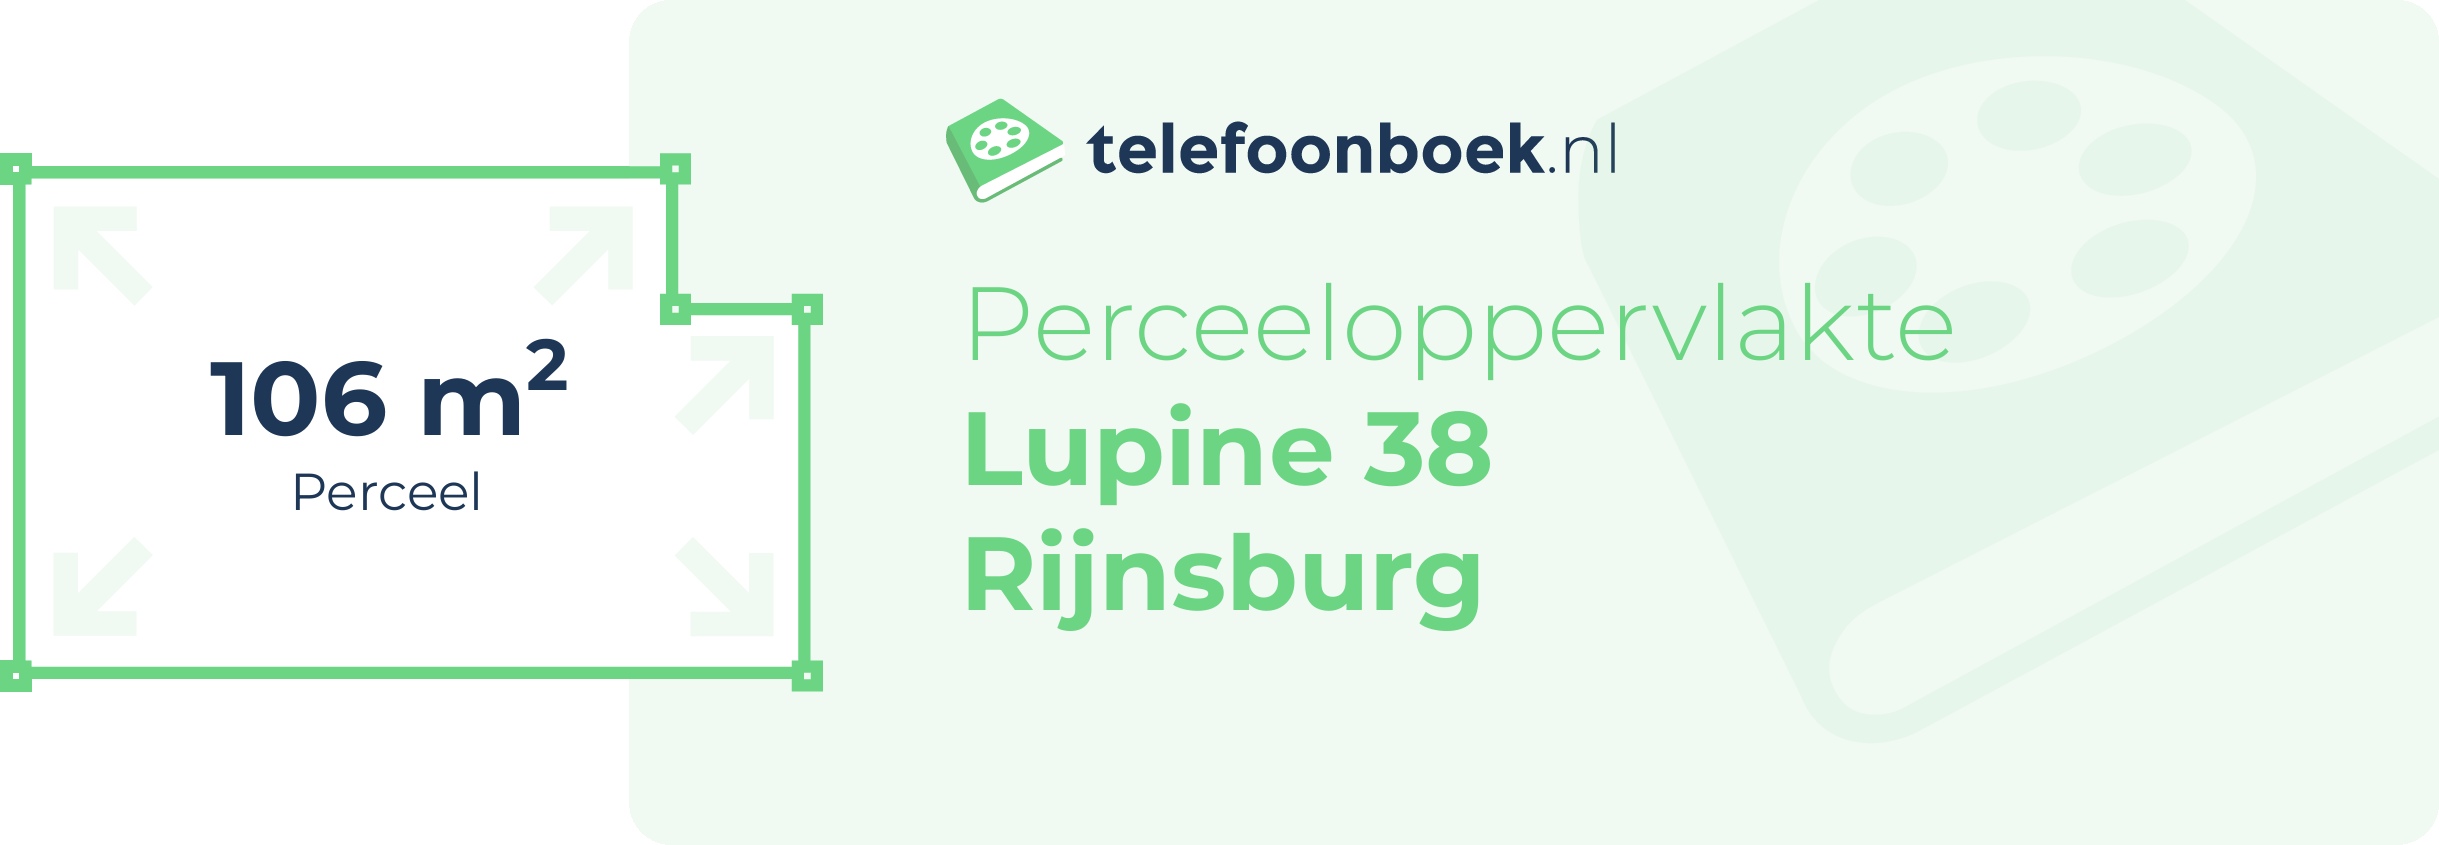 Perceeloppervlakte Lupine 38 Rijnsburg